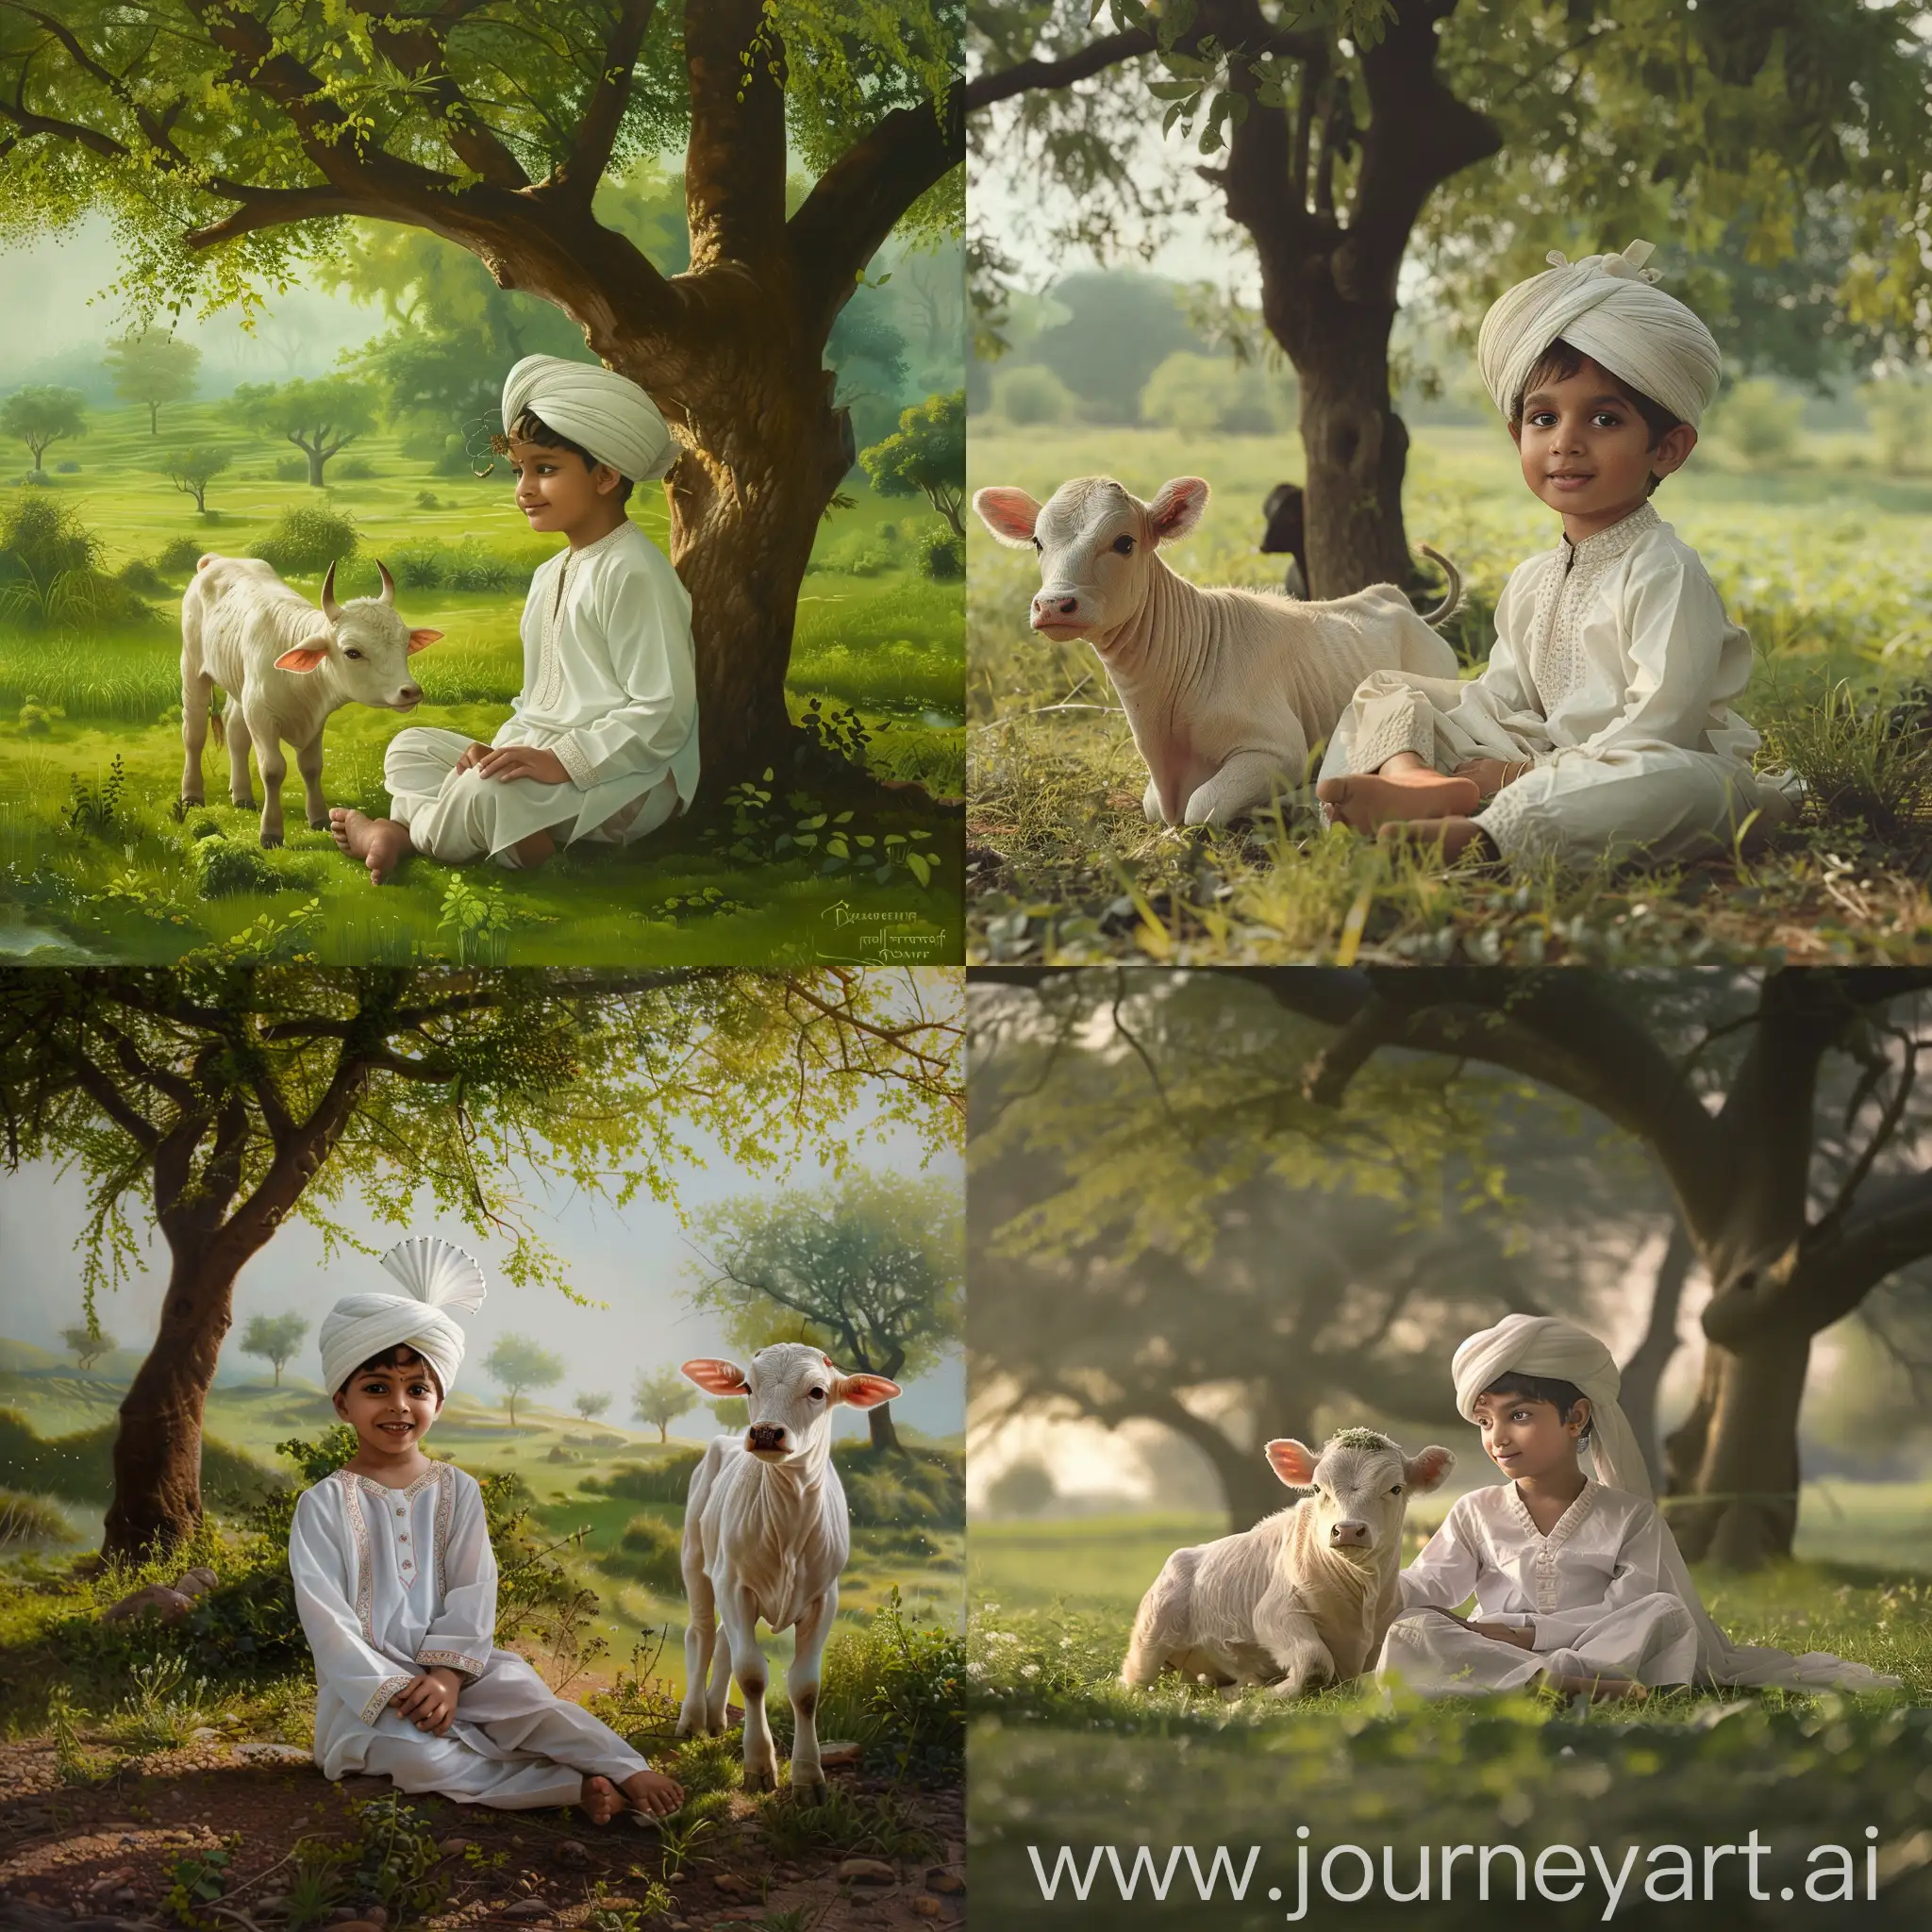 Village-Child-in-White-Kurta-Panjama-Sitting-with-Calf-in-Serene-Morning-Field